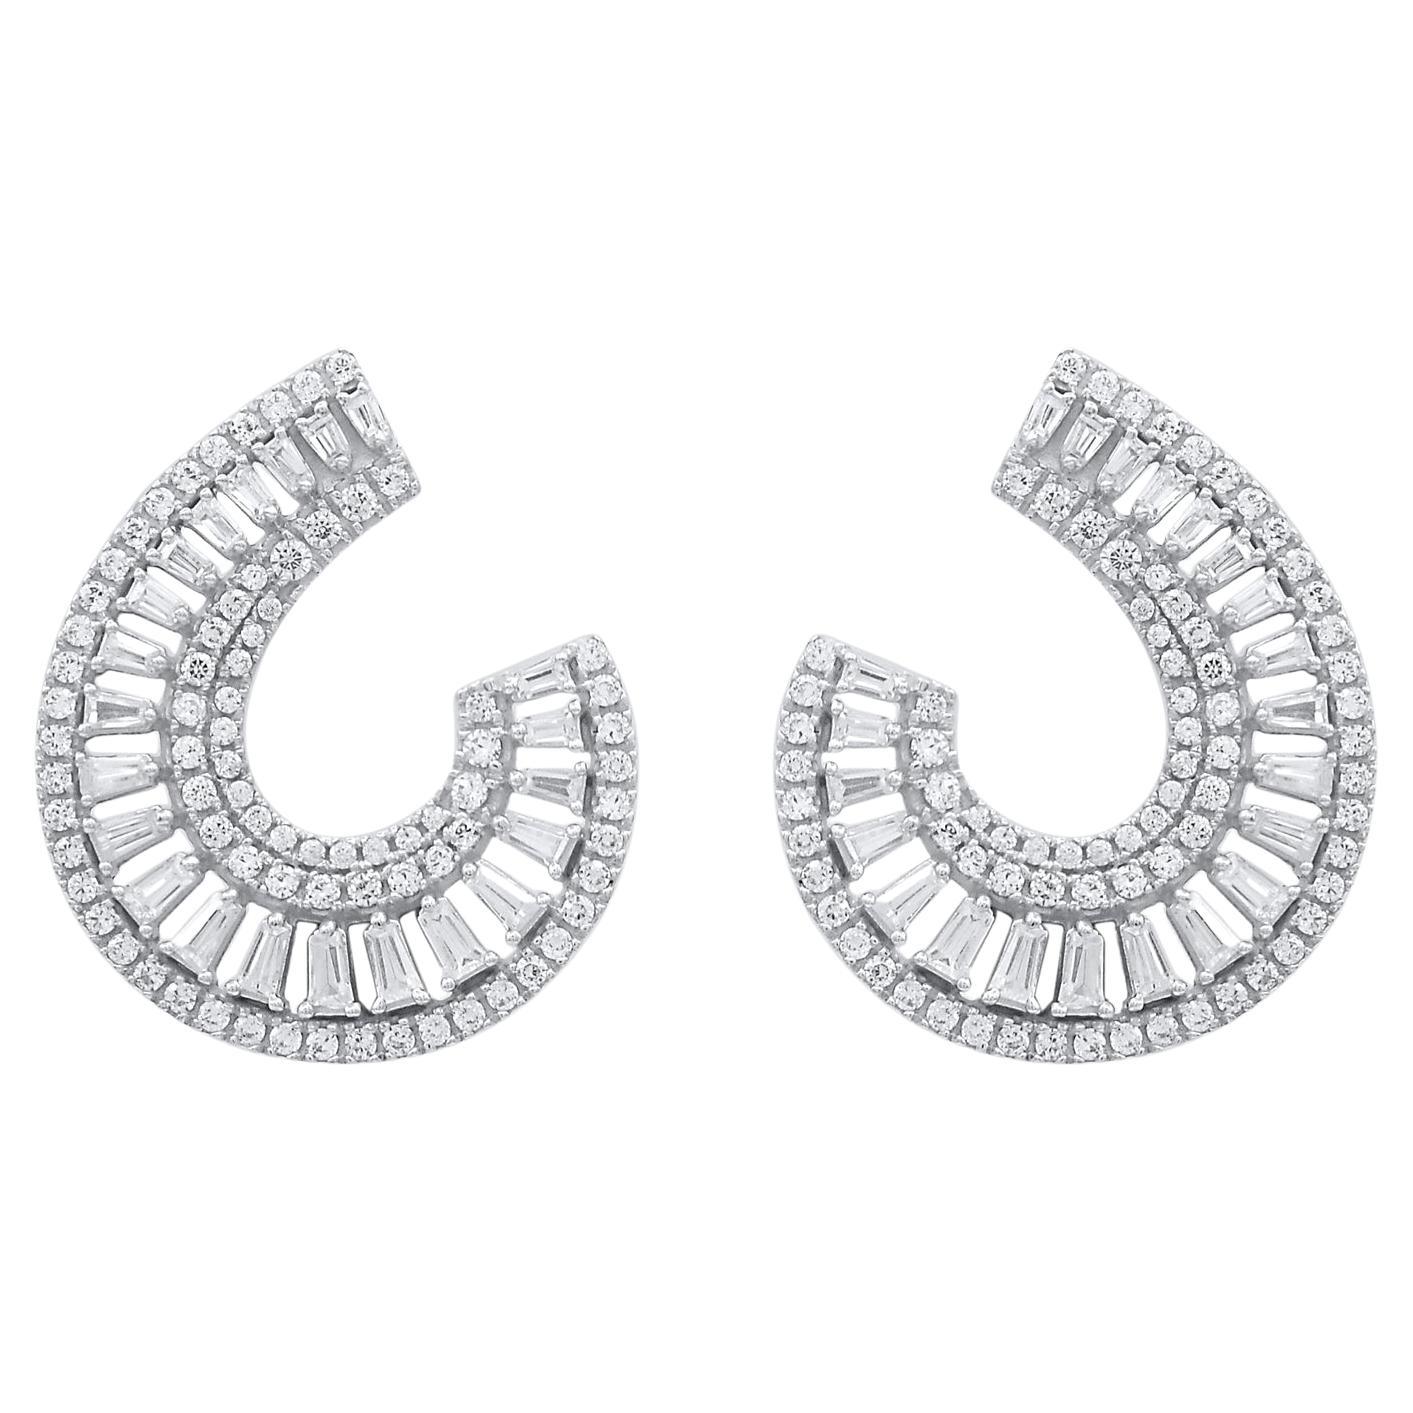 TJD 1.0 Carat Round & Baguette Cut Diamond 18 Karat White Gold Stud Earrings